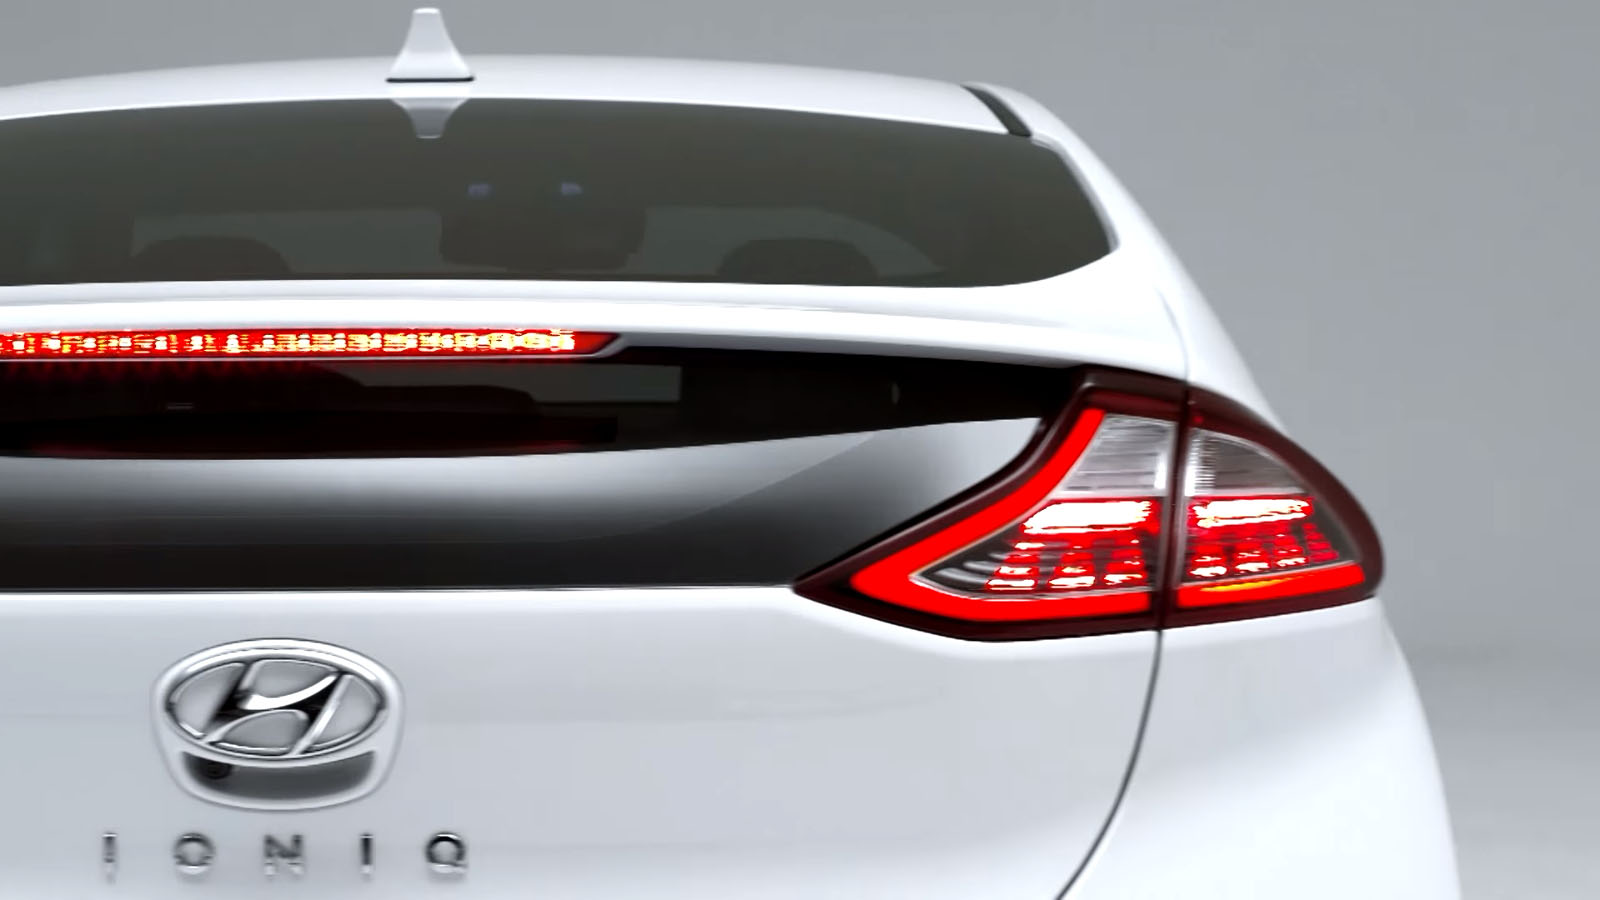 Hyundai Ioniq Electric Hybrid rear cross view